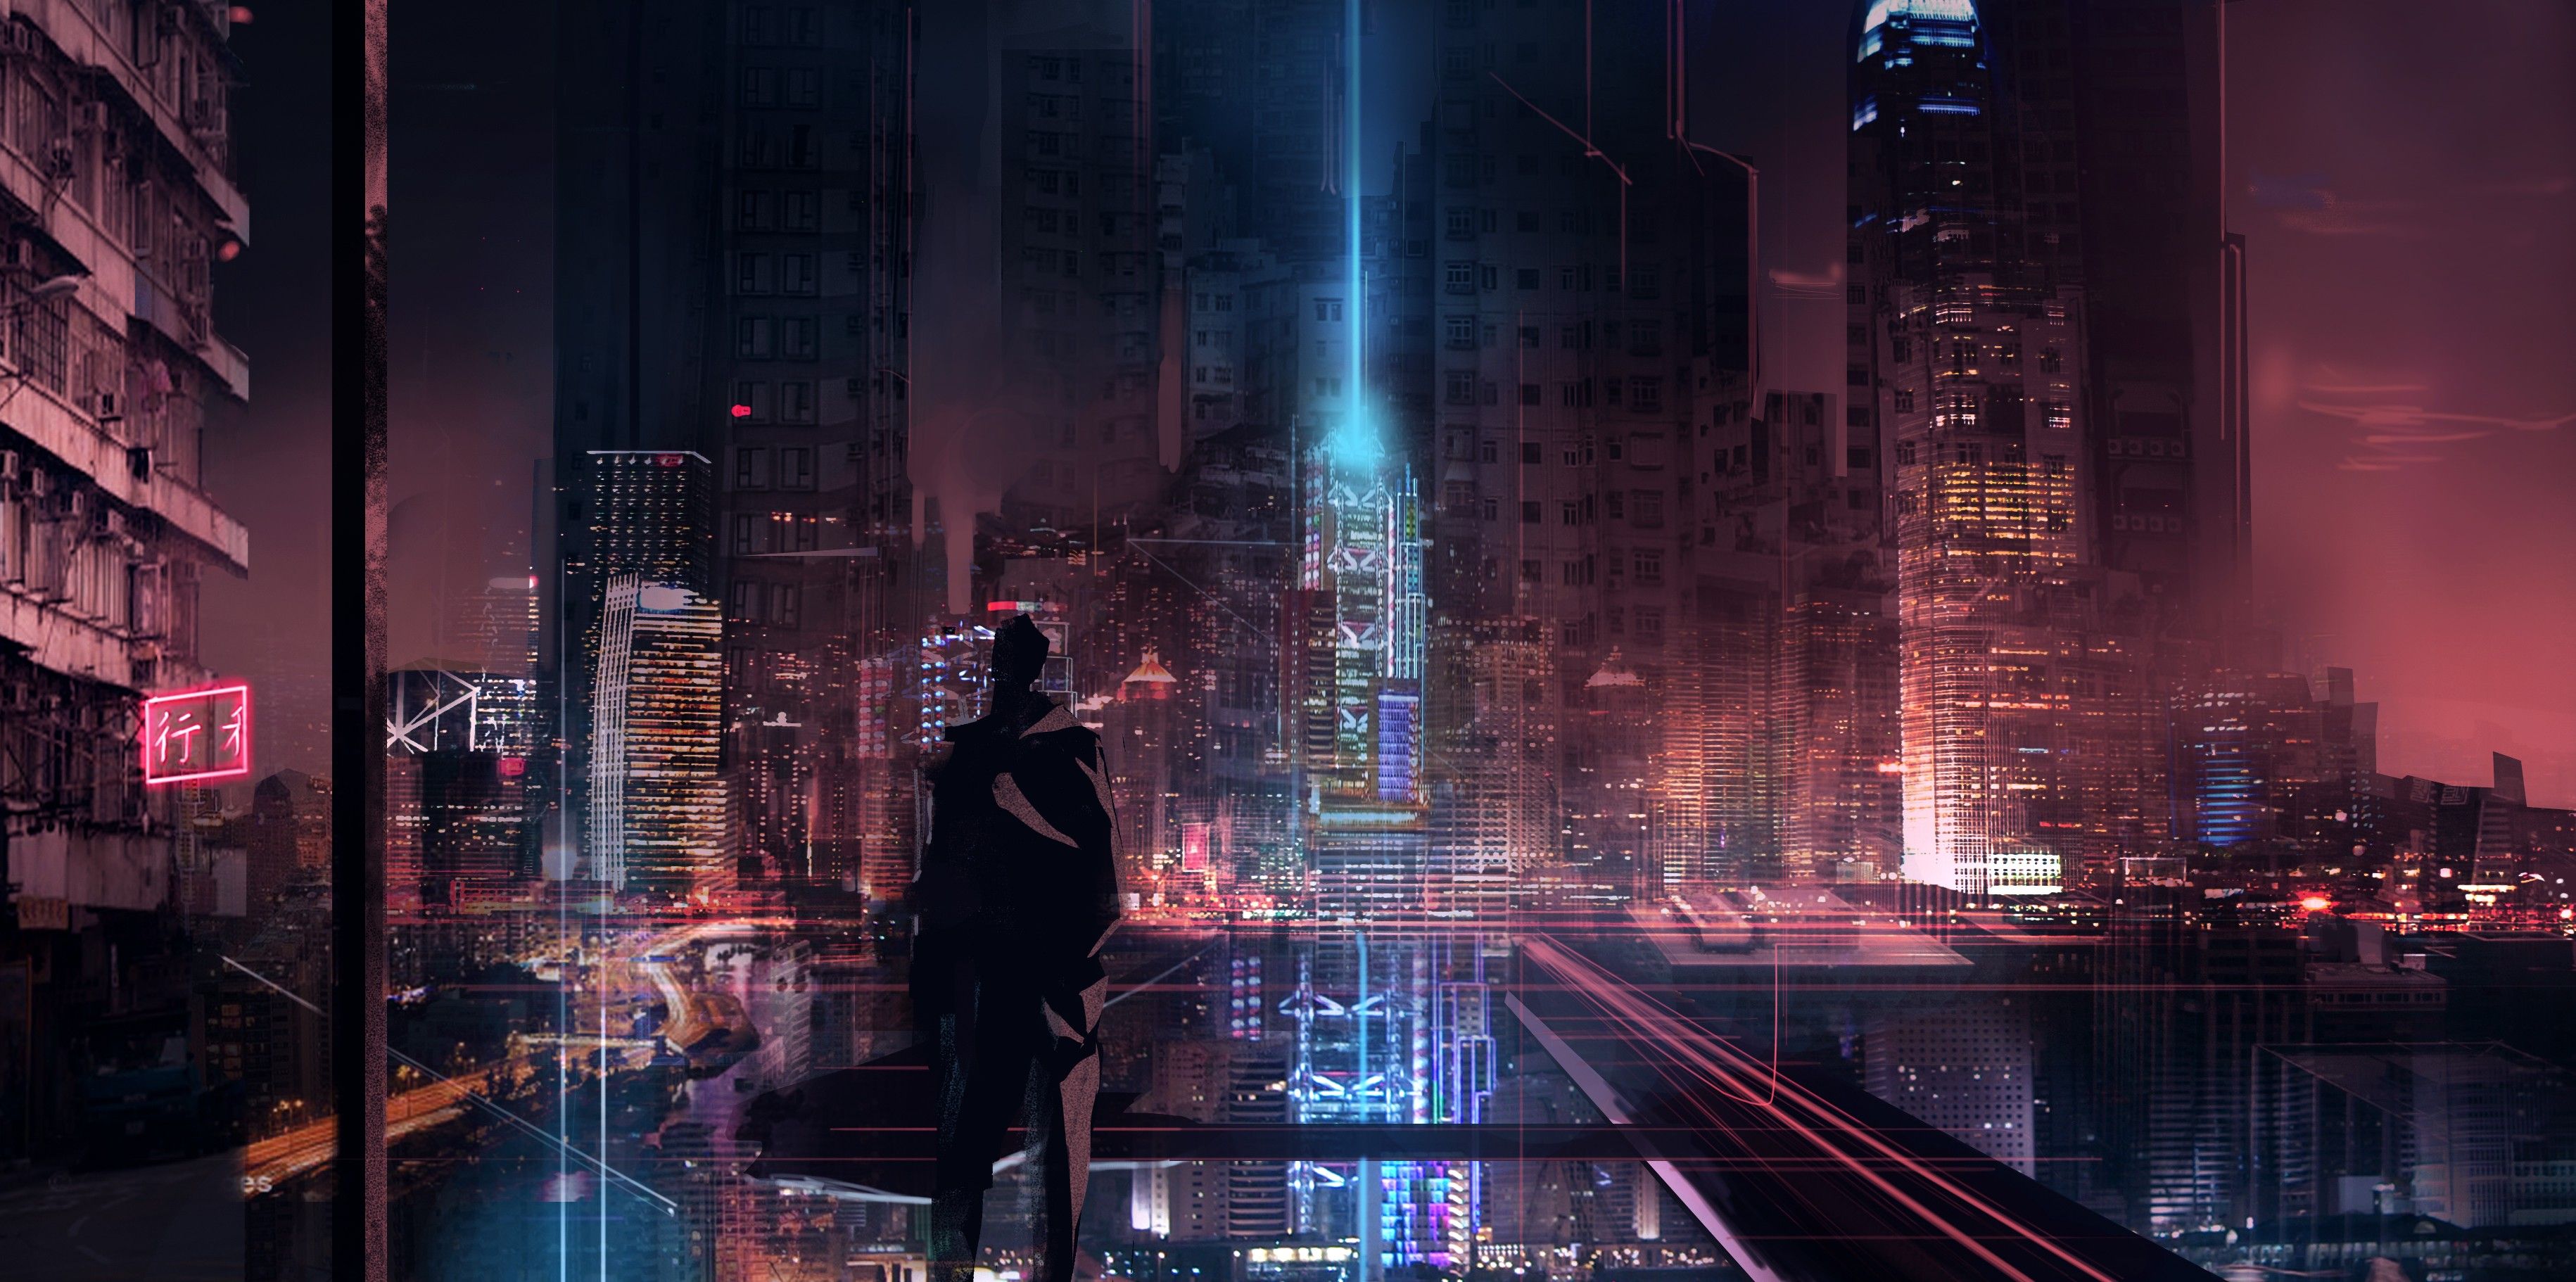 #cyberpunk, #skyscraper, #glowing, #futuristic city, #futuristic, #silhouette, #cyber, wallpaper